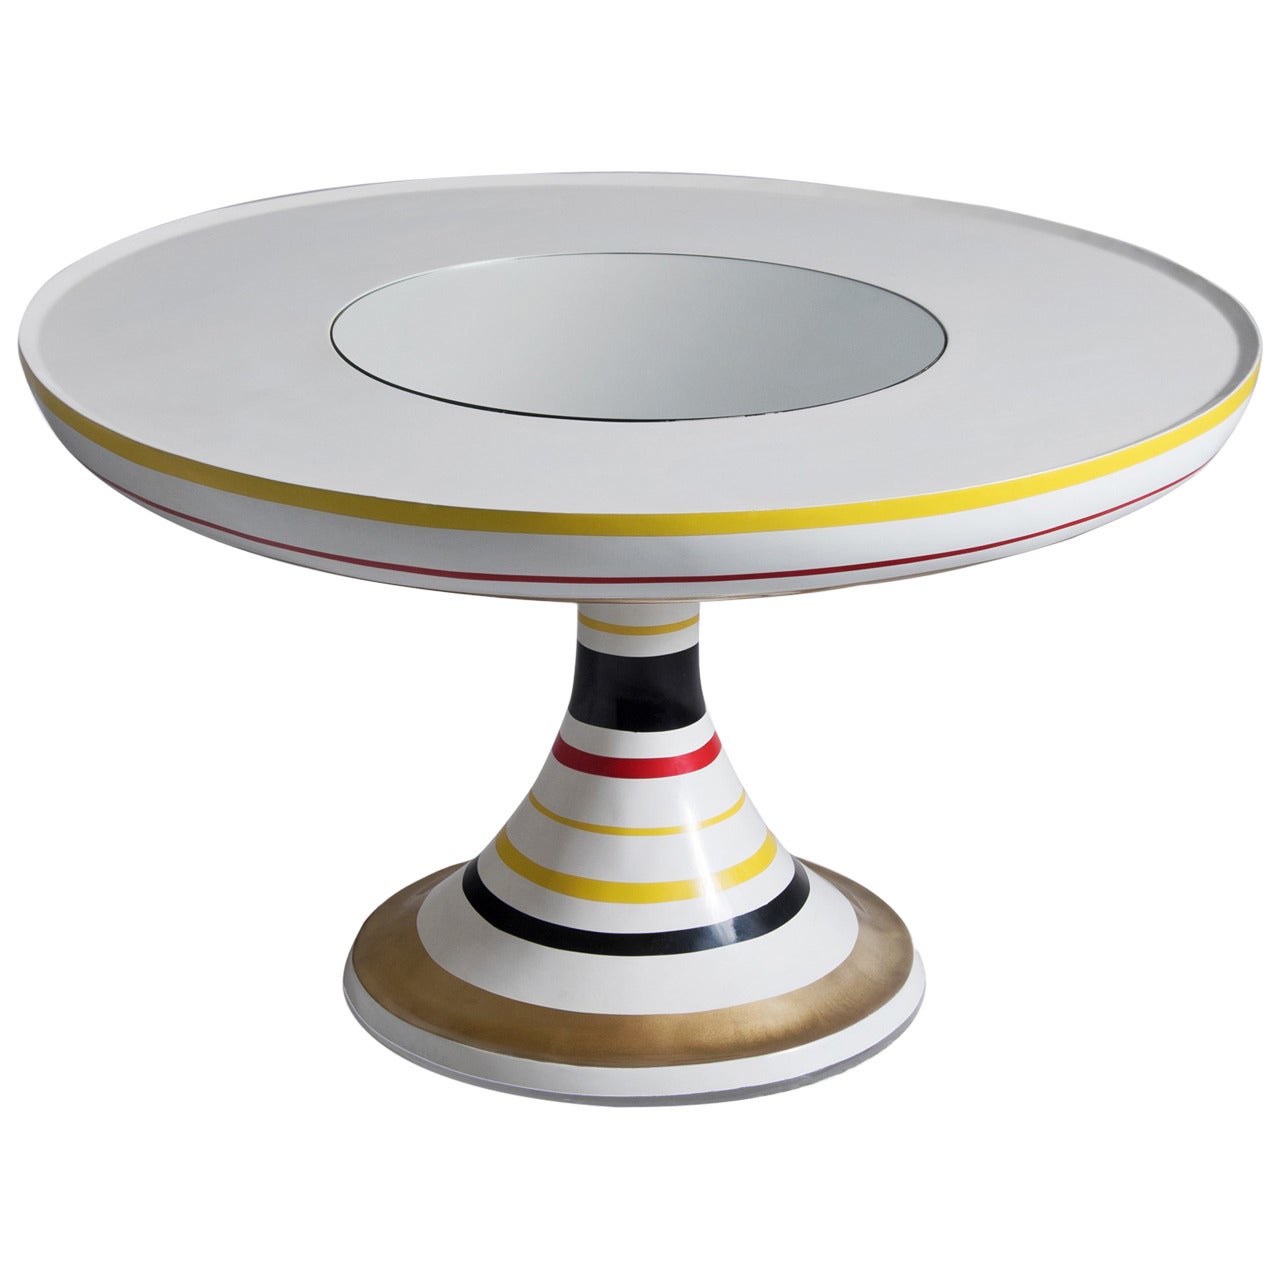 Valentina Audrito Colorful Round Pedestal Table